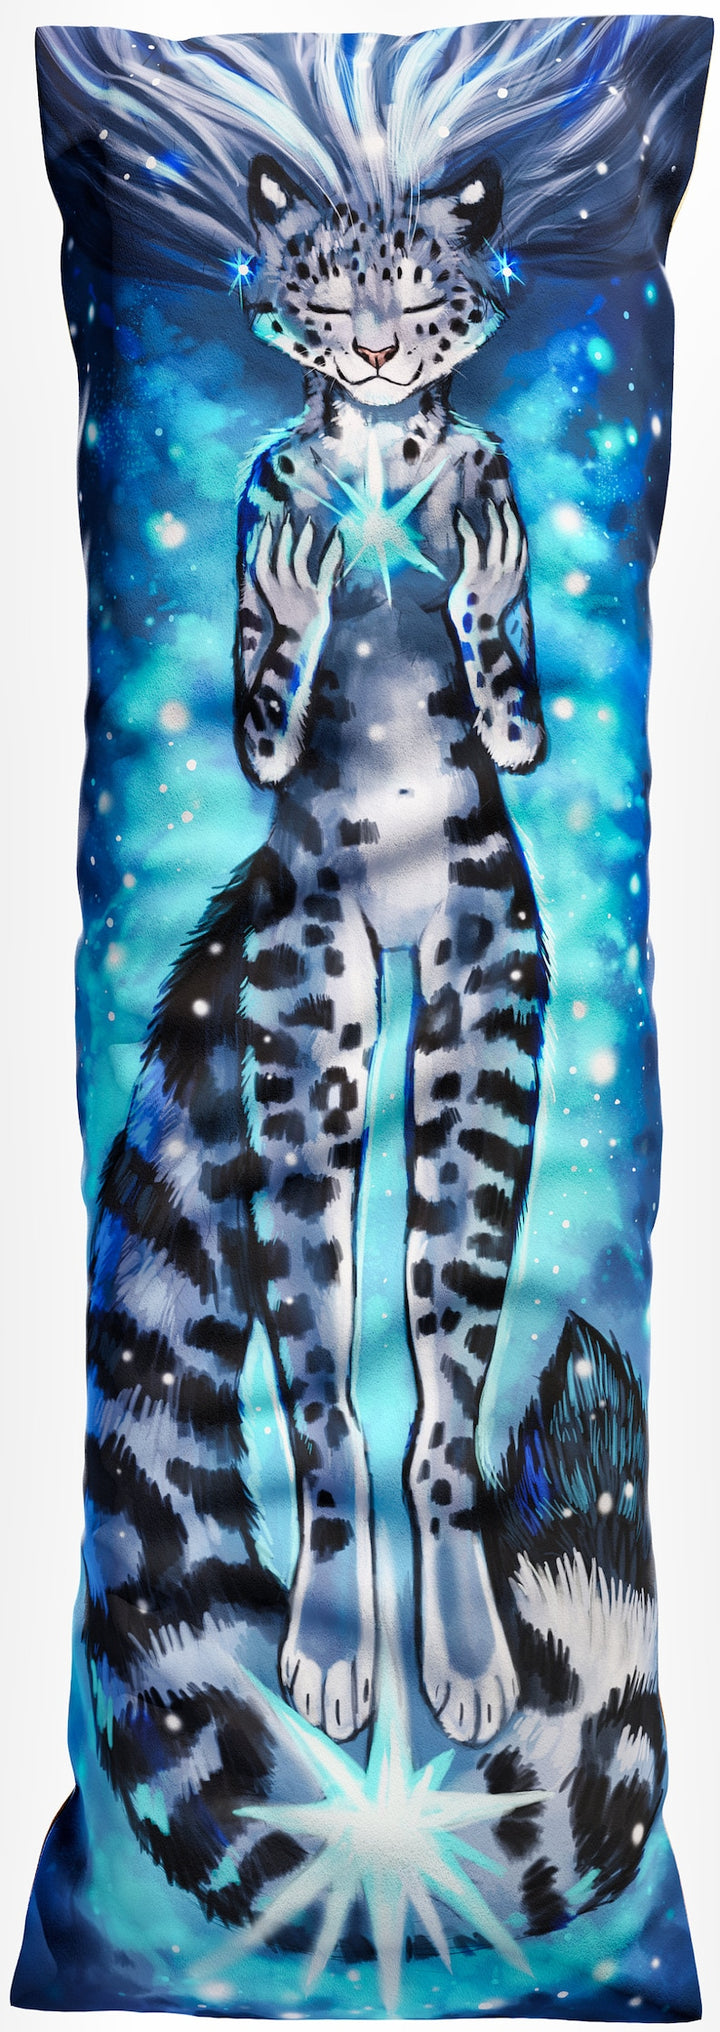 Daki Equinix - Art by Flash_lioness - The Snow leopard sun and stars Dakimakura Furry Body Pillow Cover